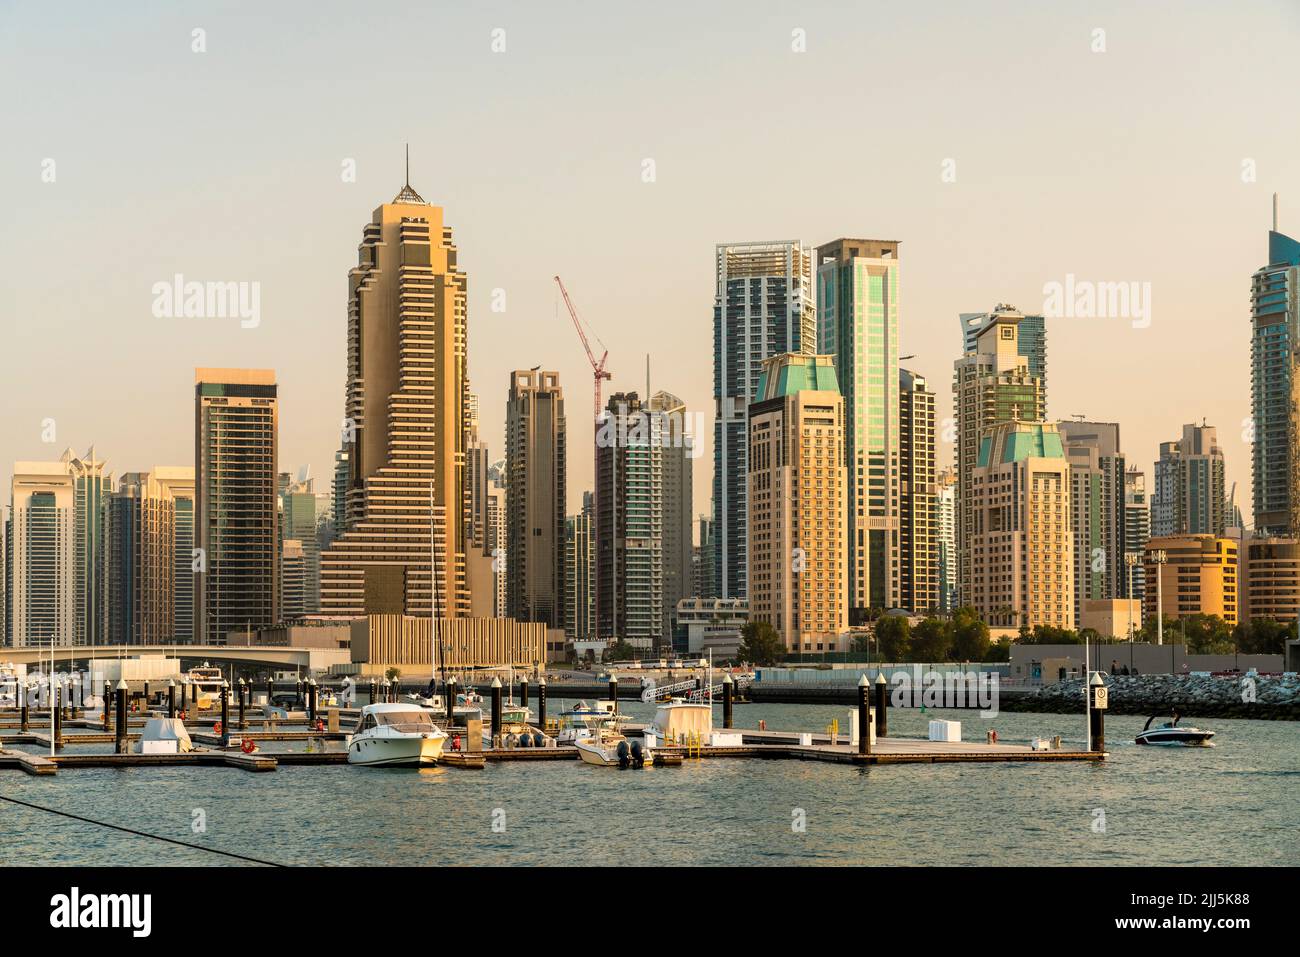 United Arab Emirates, Dubai, Dubai Marina with tall skyscrapers in background Stock Photo